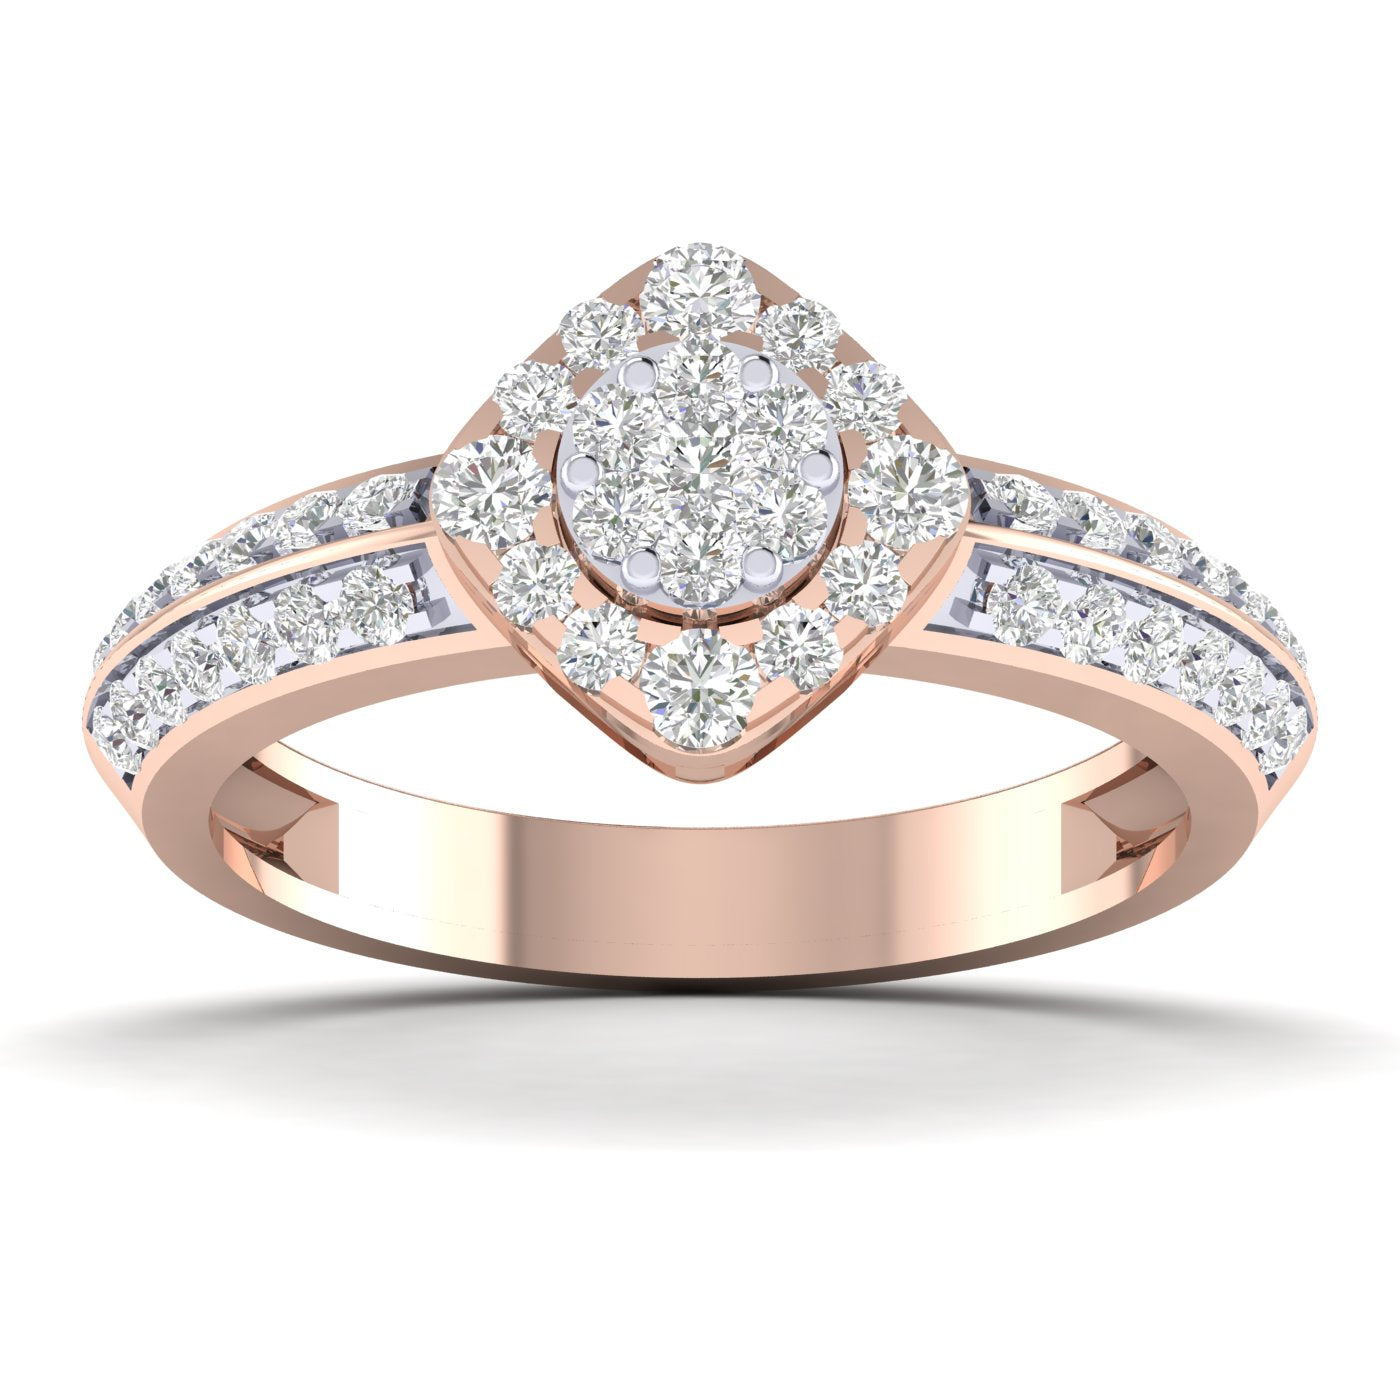 Eternity Diamond Ring